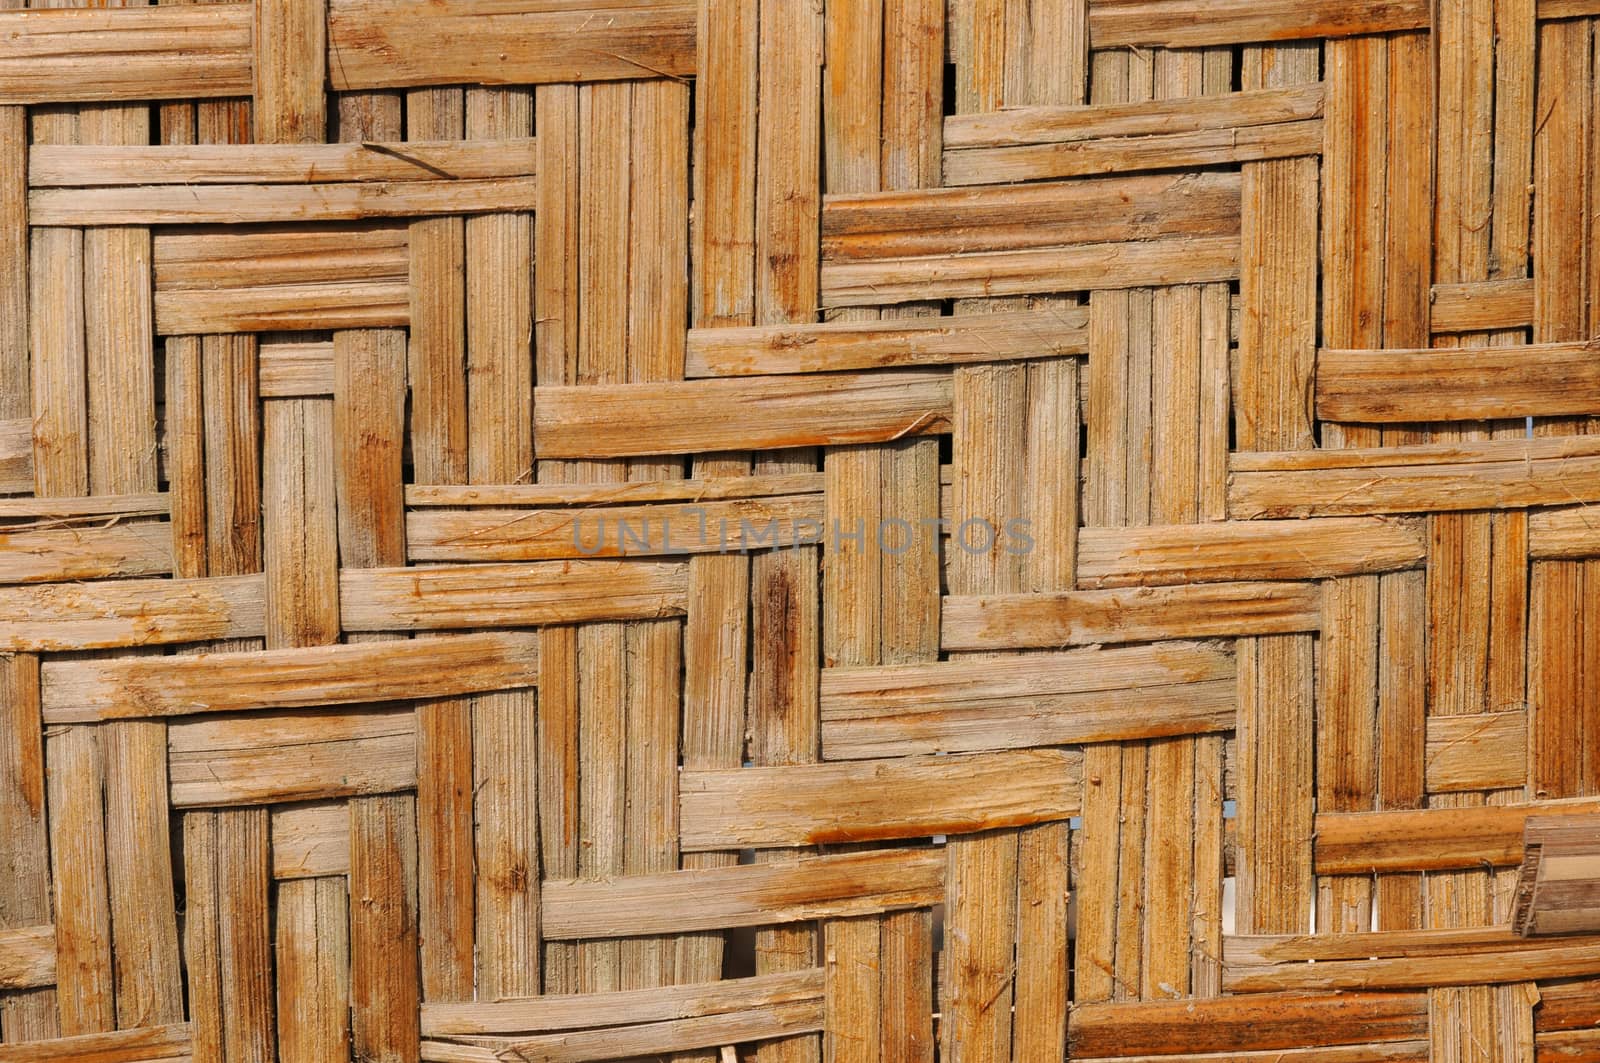 Braided wood pattern in marine area